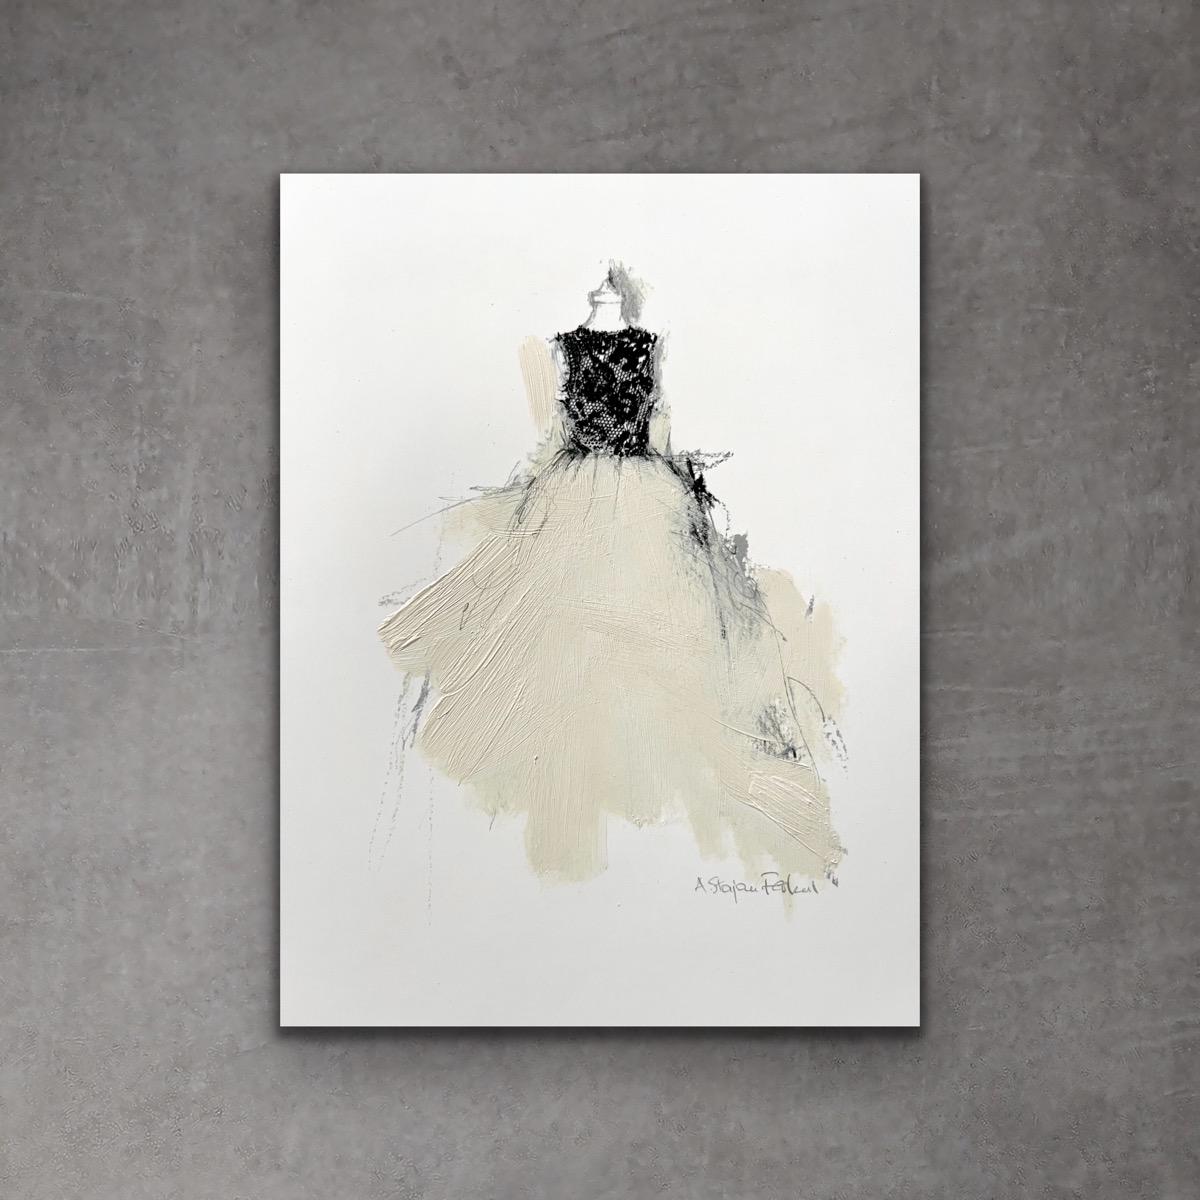 Andrea Stajan-Ferkul Print – The Dressing Room 1 - 18x22cm, Kunstdruck mit handbemalten Elementen, Beige, Schwarz